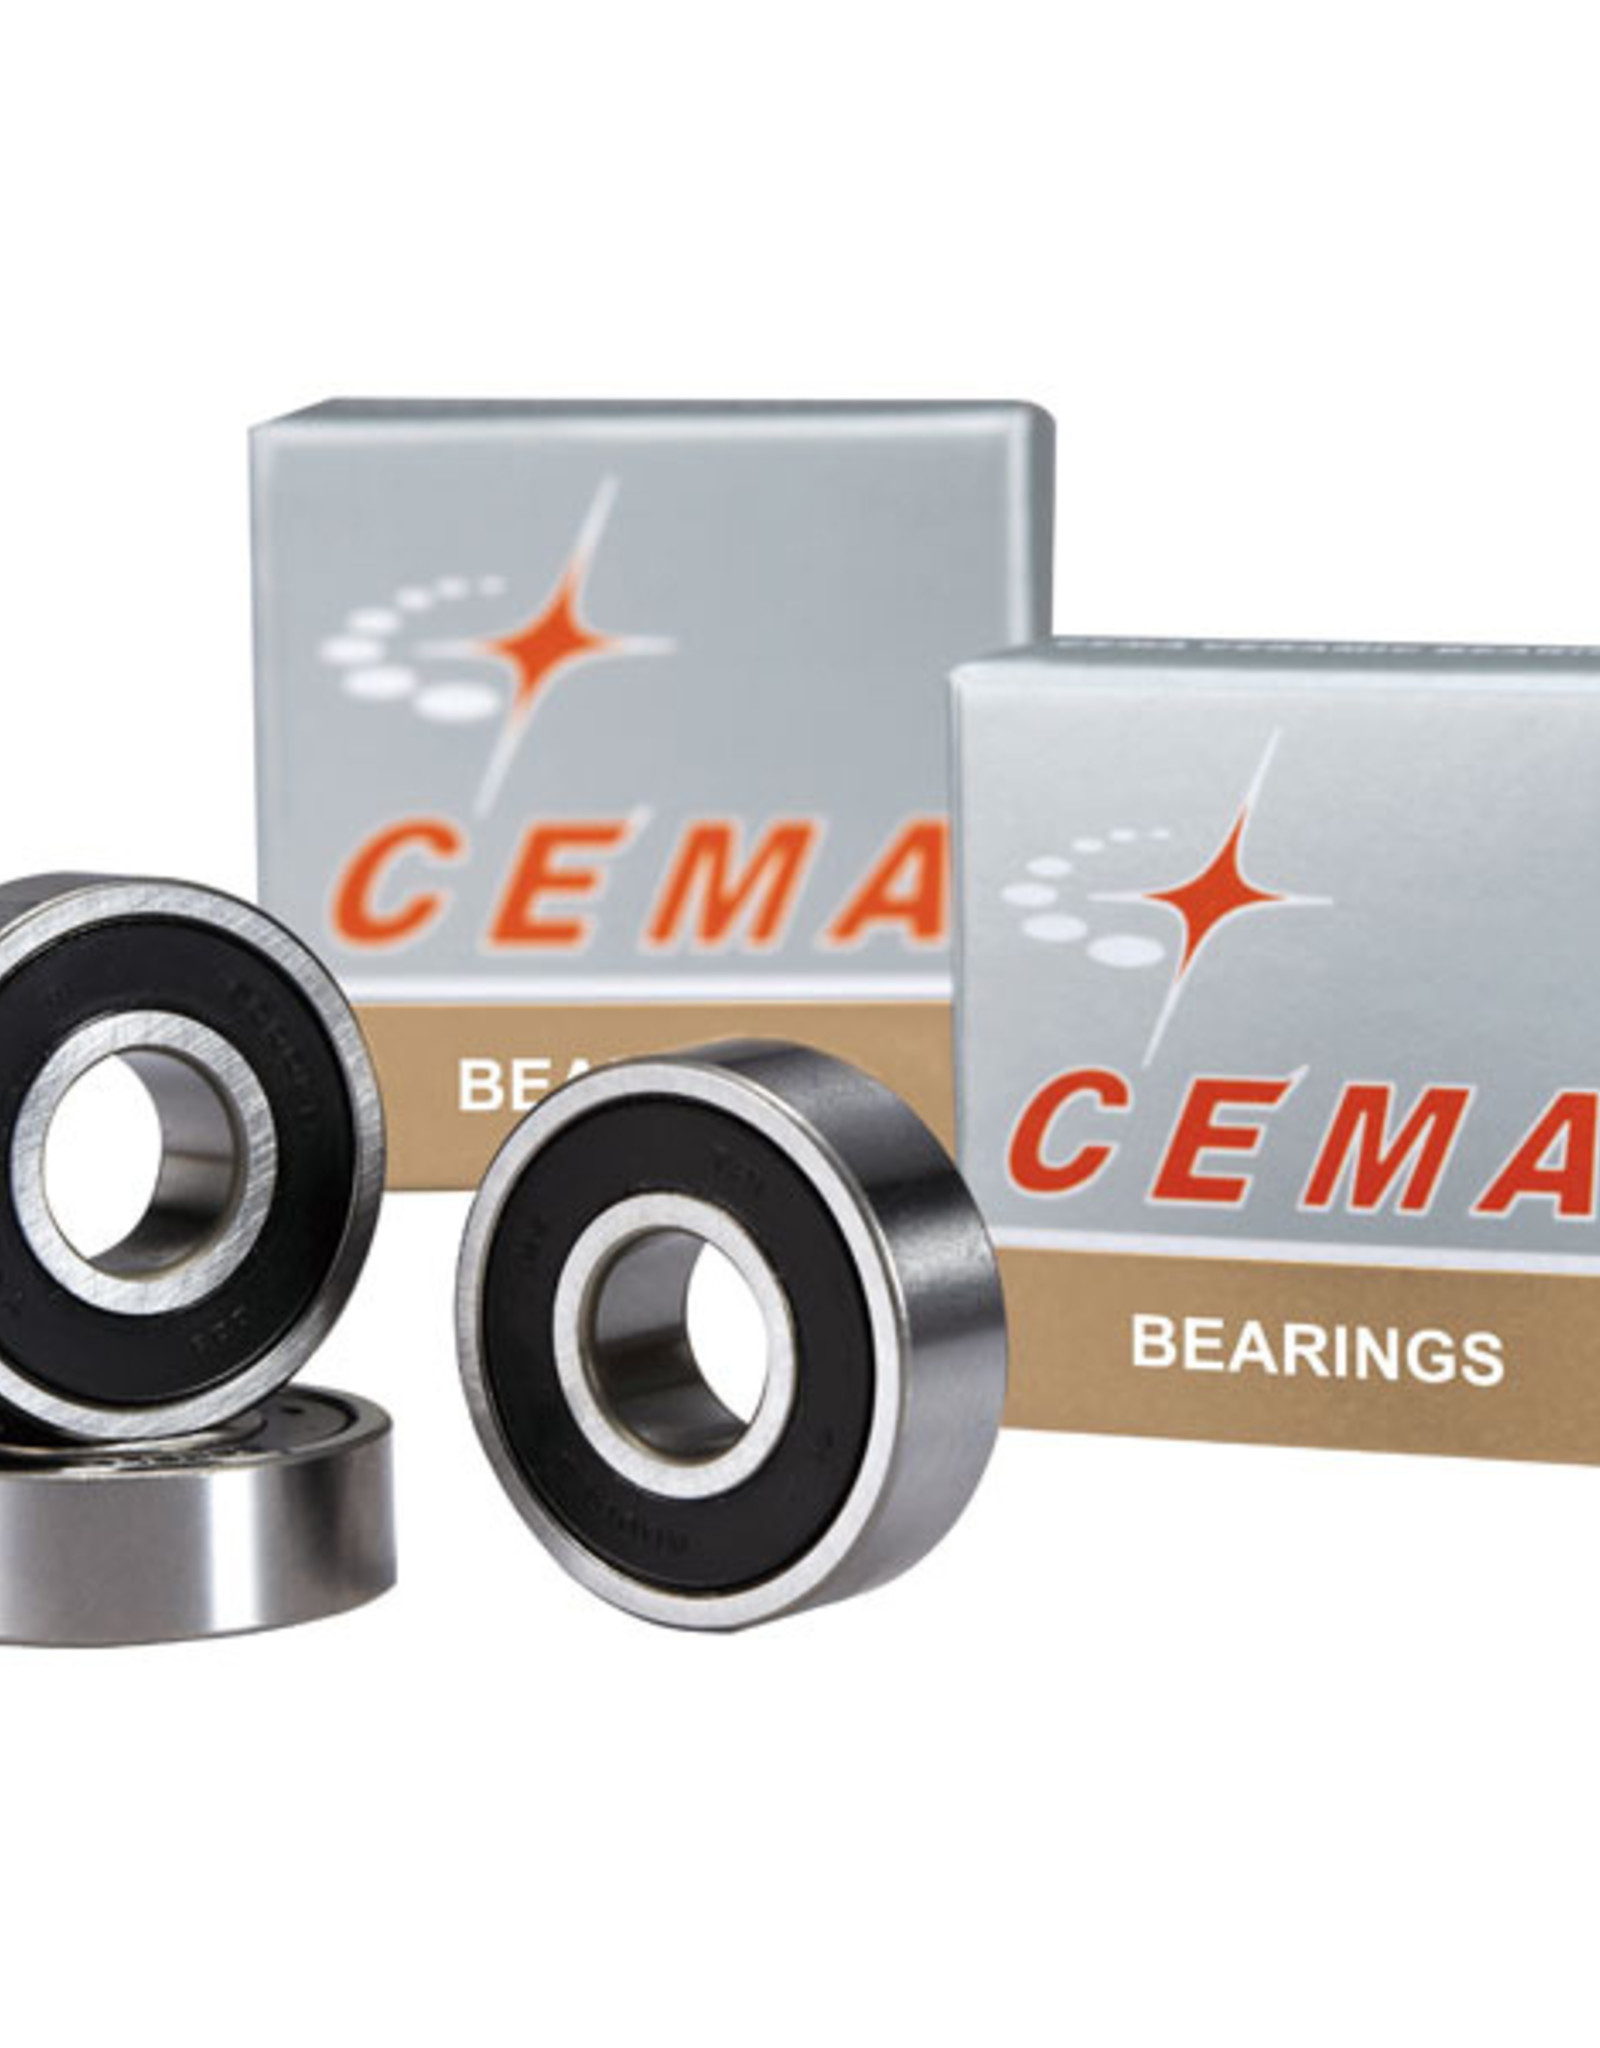 Cema Chrome Steel Headset Bearing (41 x 30.1 x 6.5mm)